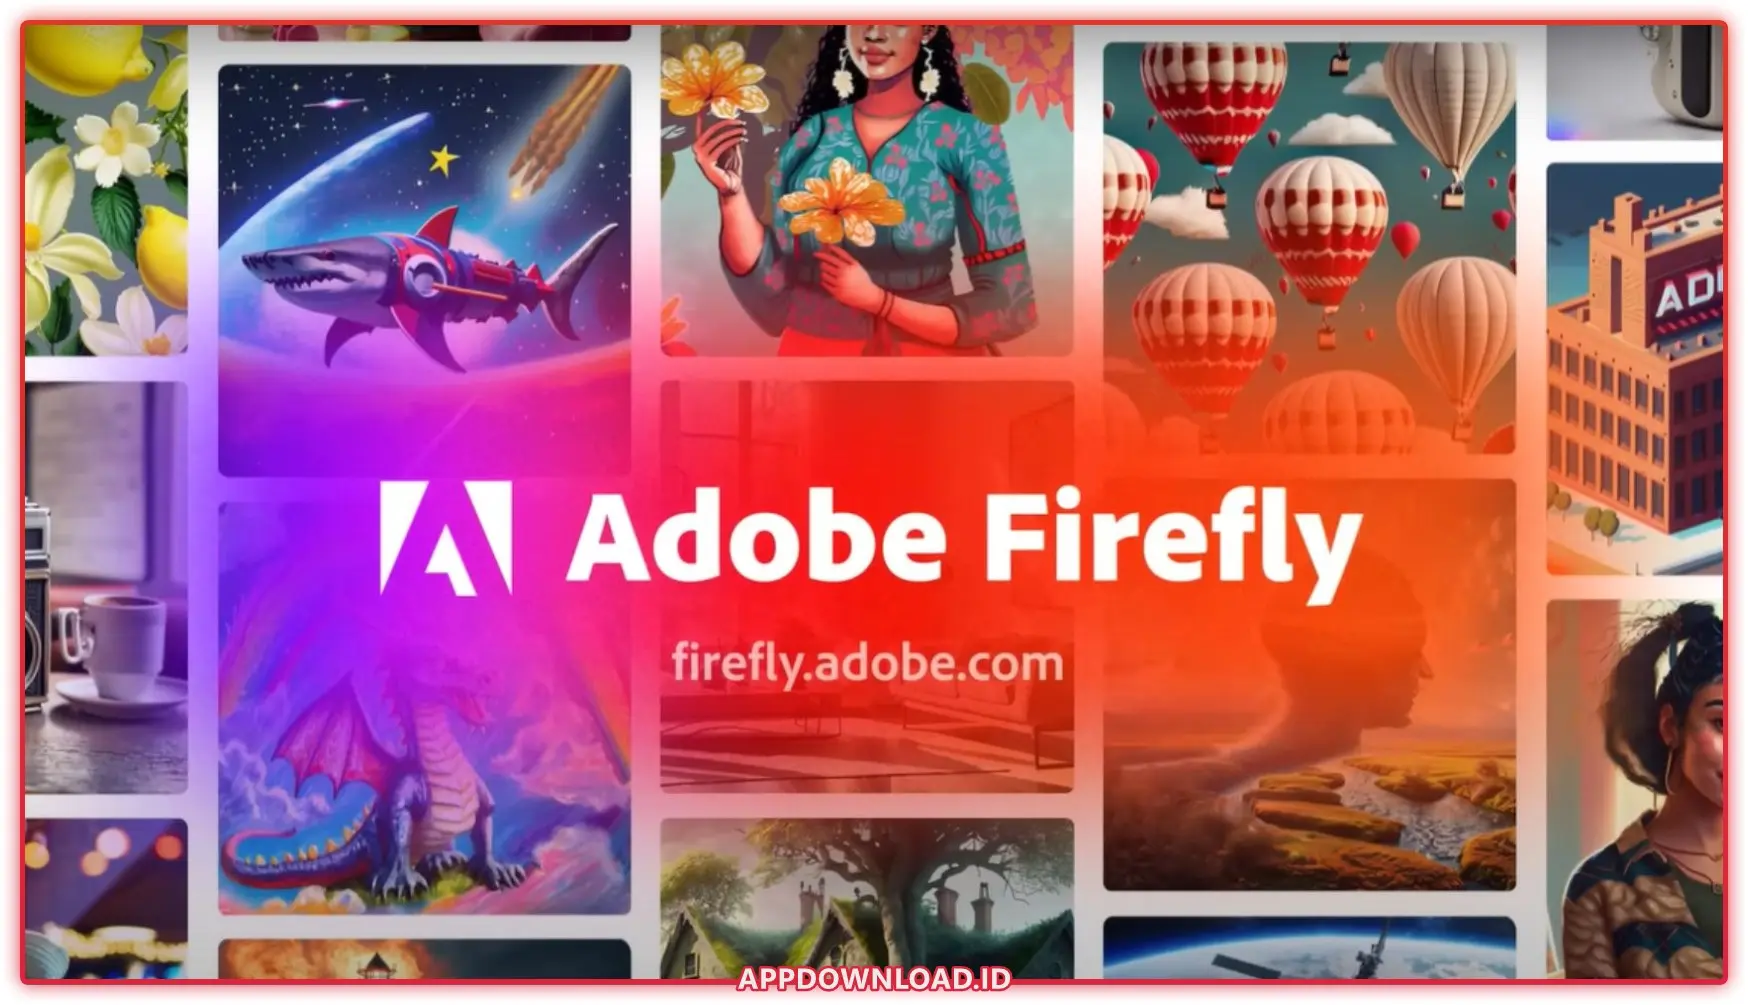 Adobe Firefly for Adobe Photoshop